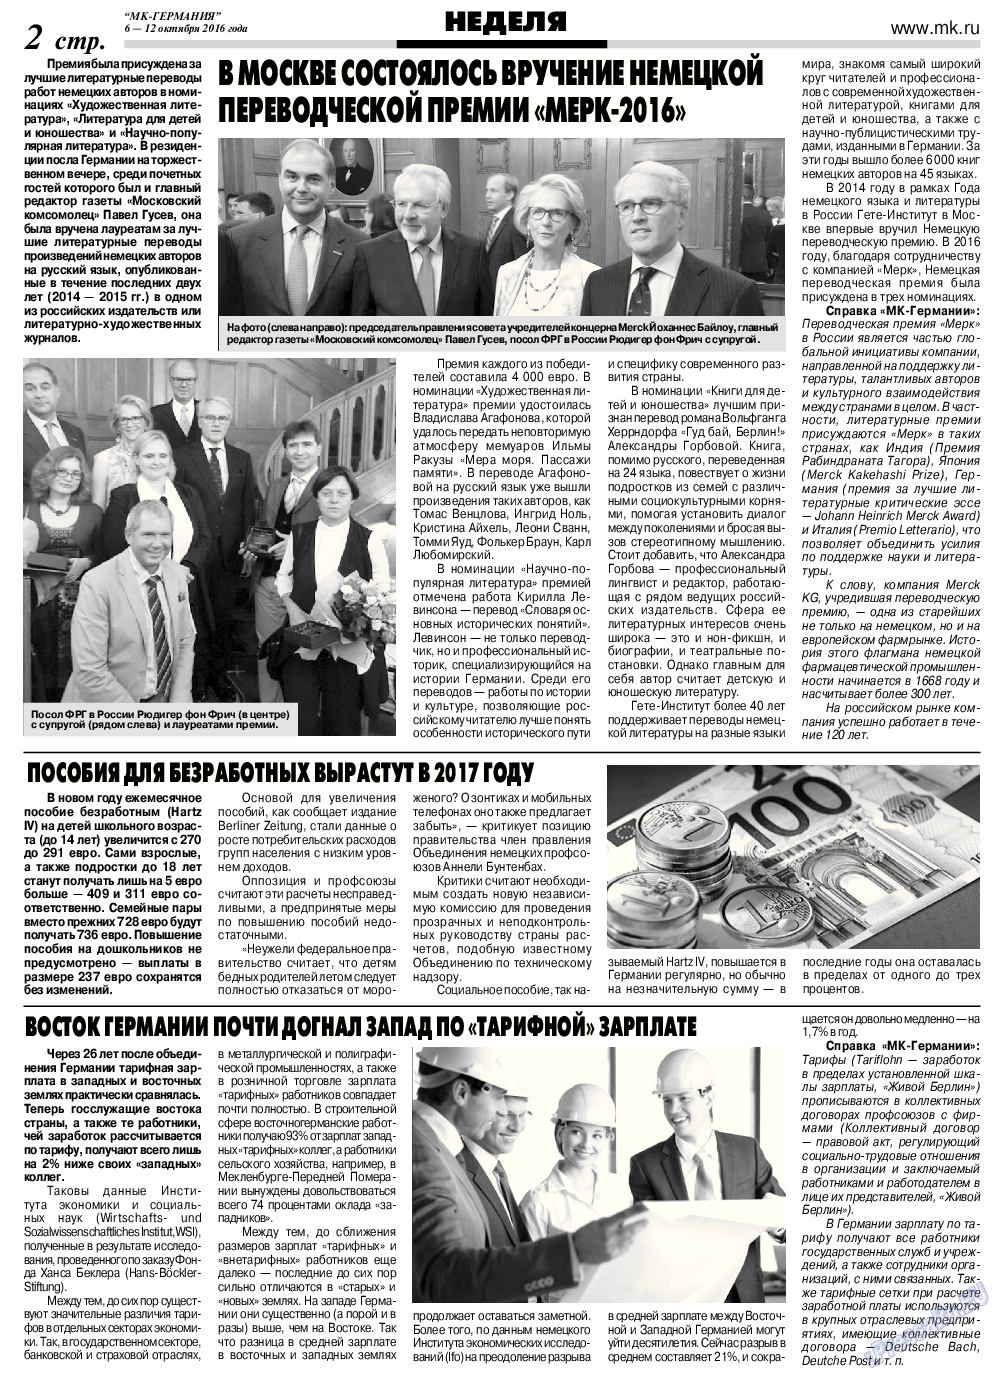 МК-Германия, газета. 2016 №41 стр.2